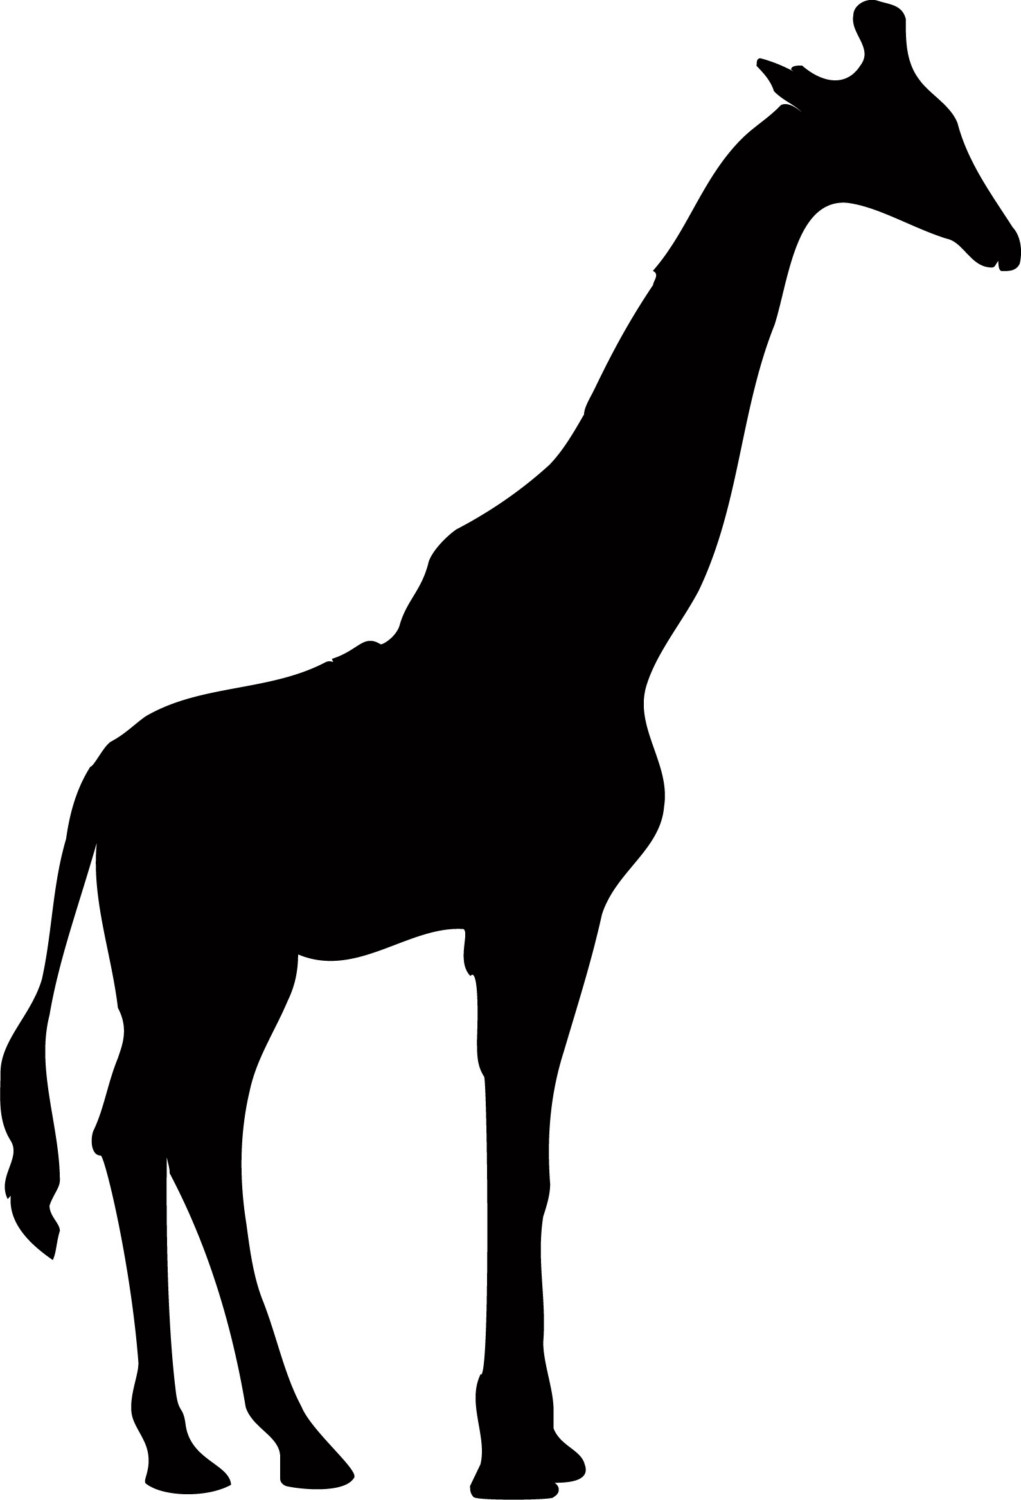 giraffe silhouette | Free Vec